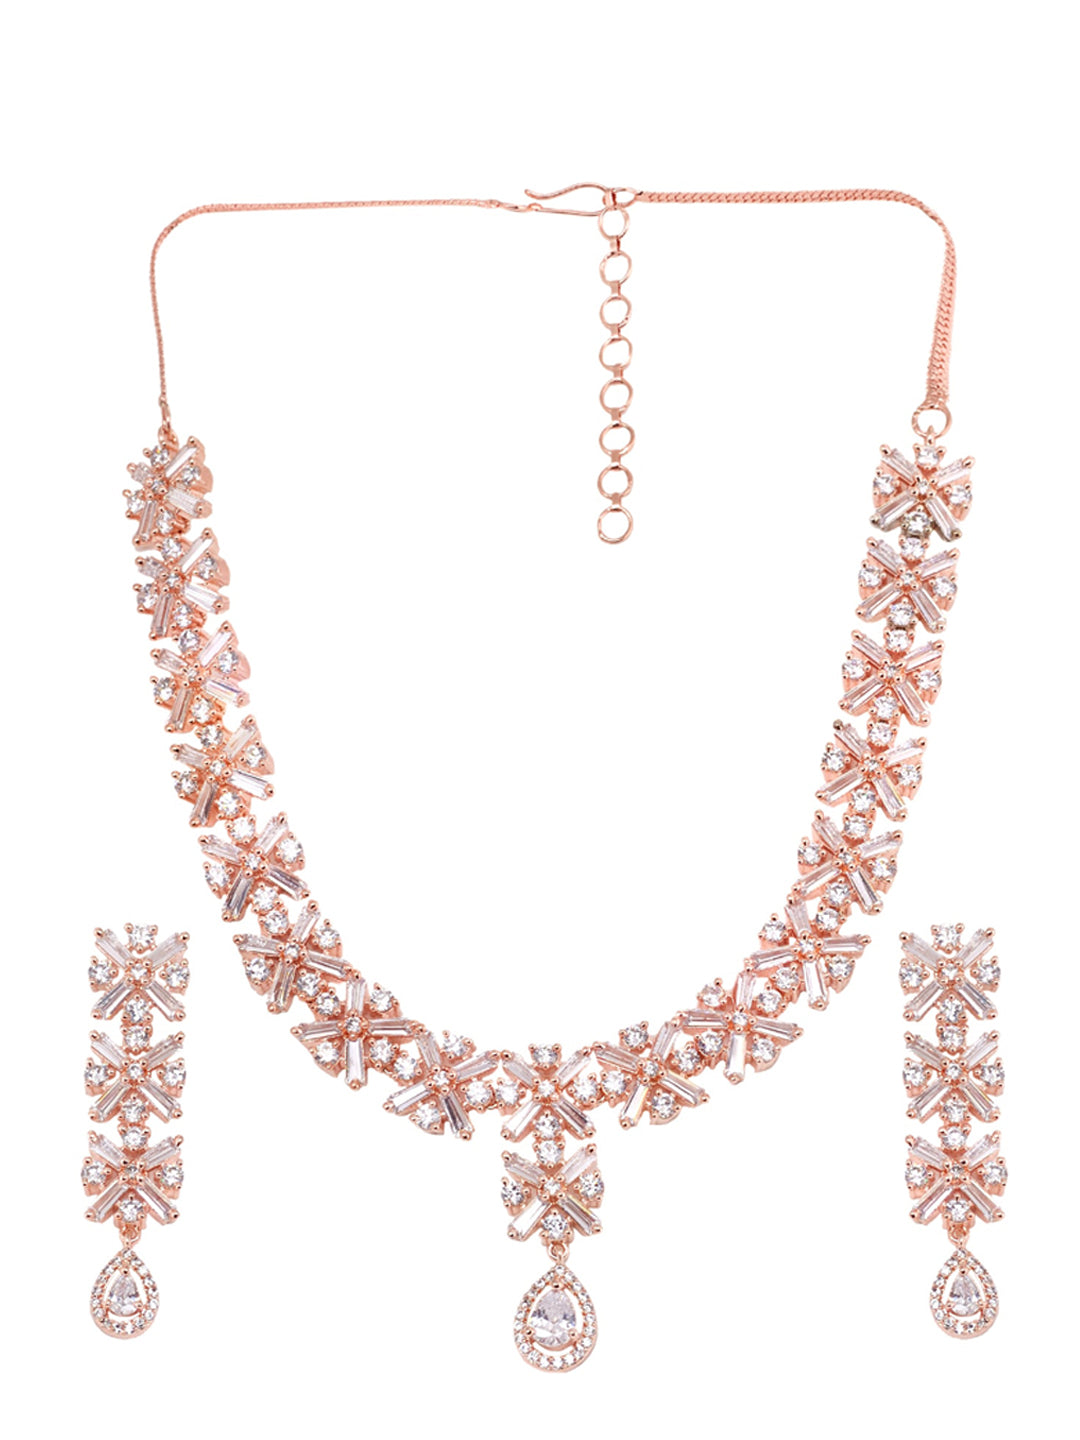 Rose gold American diamond necklace set